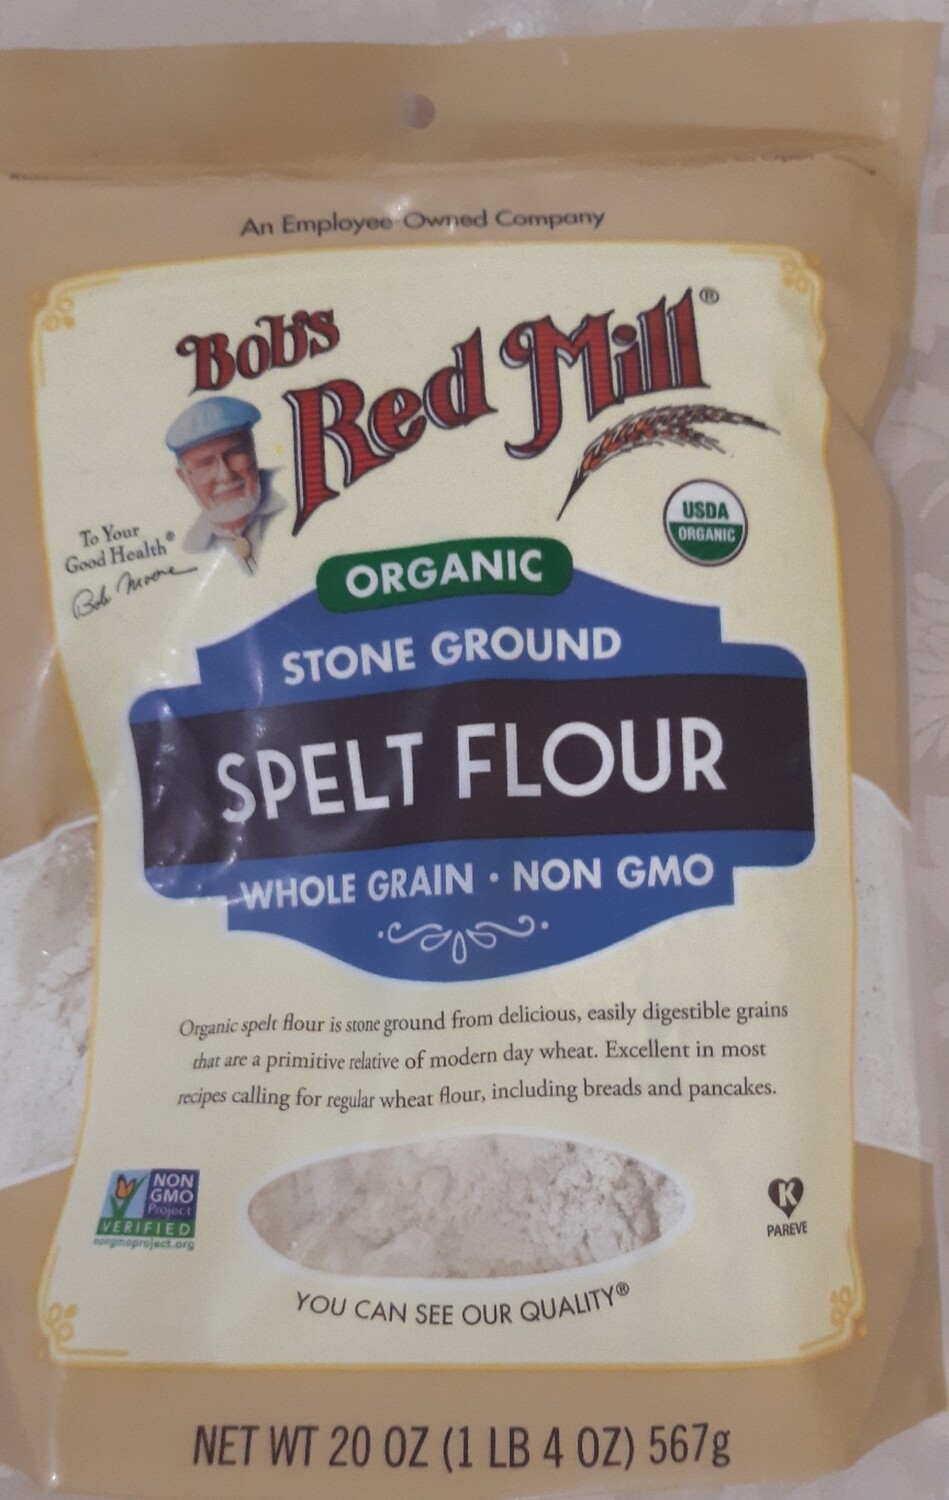 Bob's Red Mill: Organic Stone Ground
SPELT FLOUR - Whole Grain [Incl. 4 x 20oz]